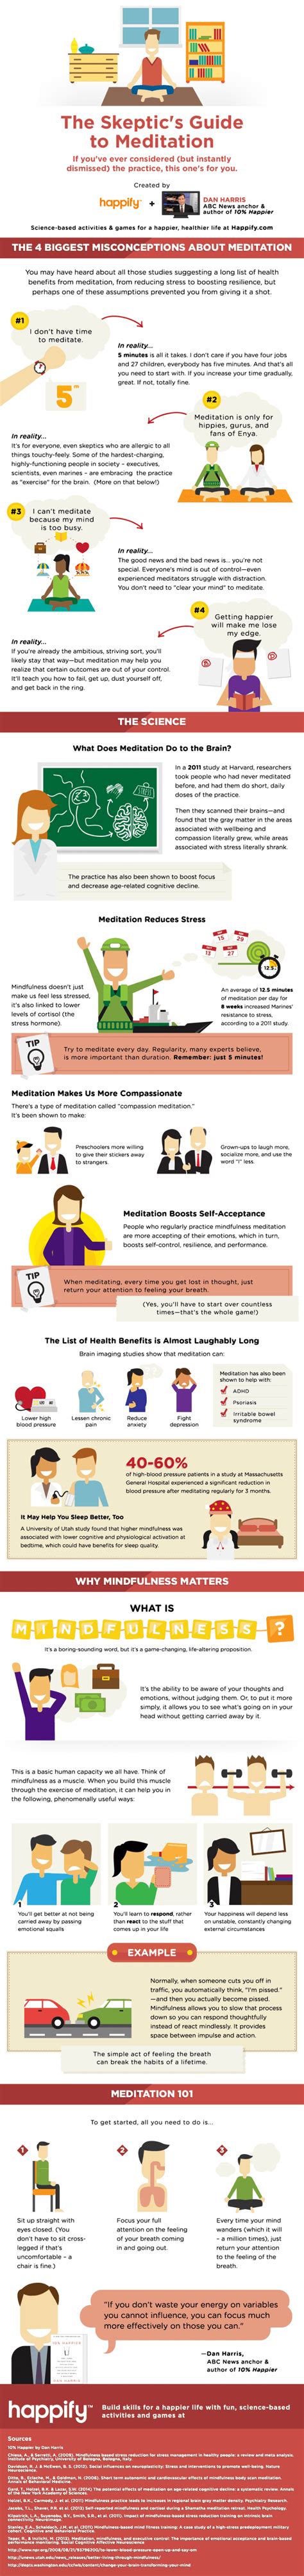 the skeptic s guide to meditation infographic mindbodygreen